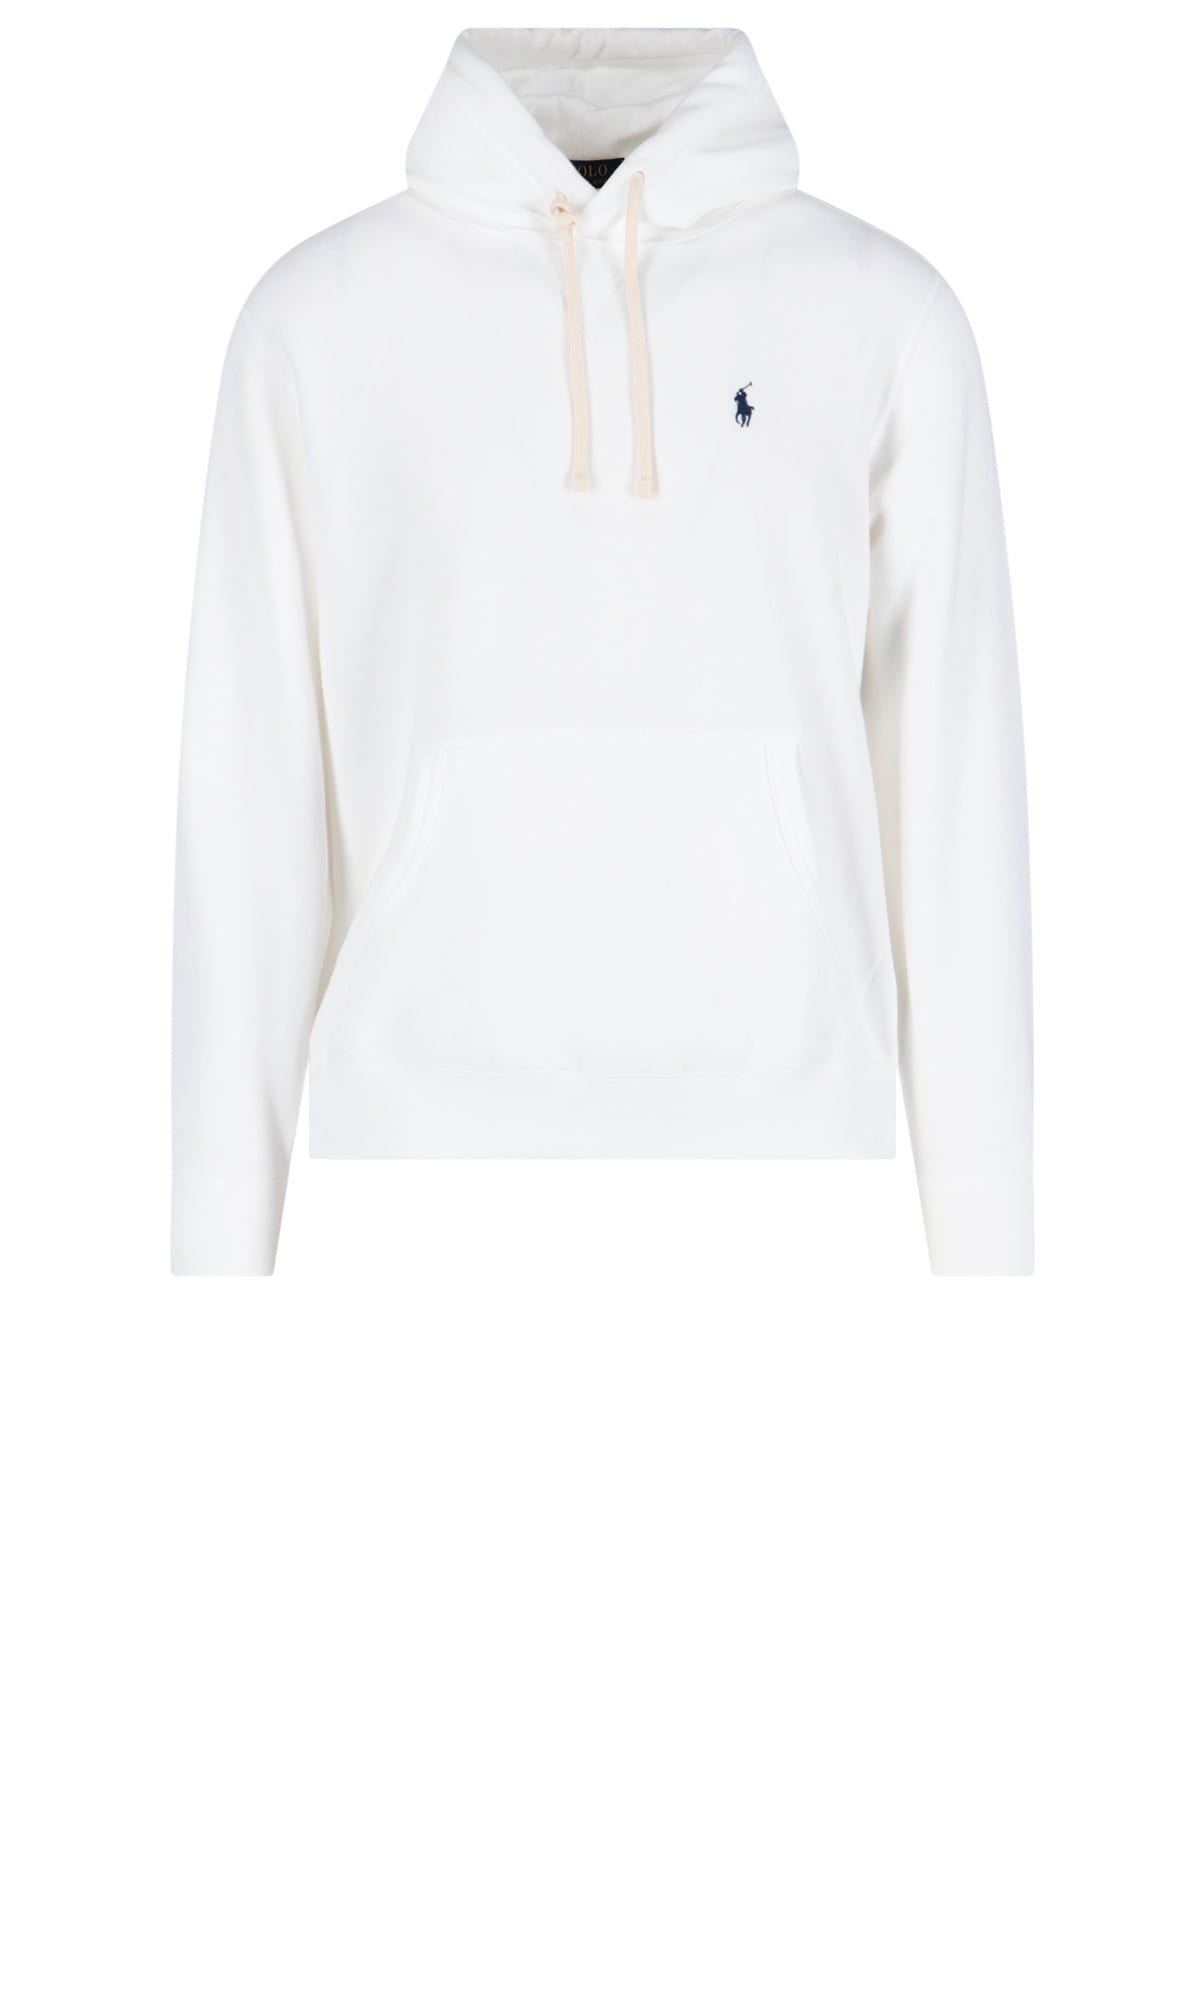 Ralph Lauren Sweater In White